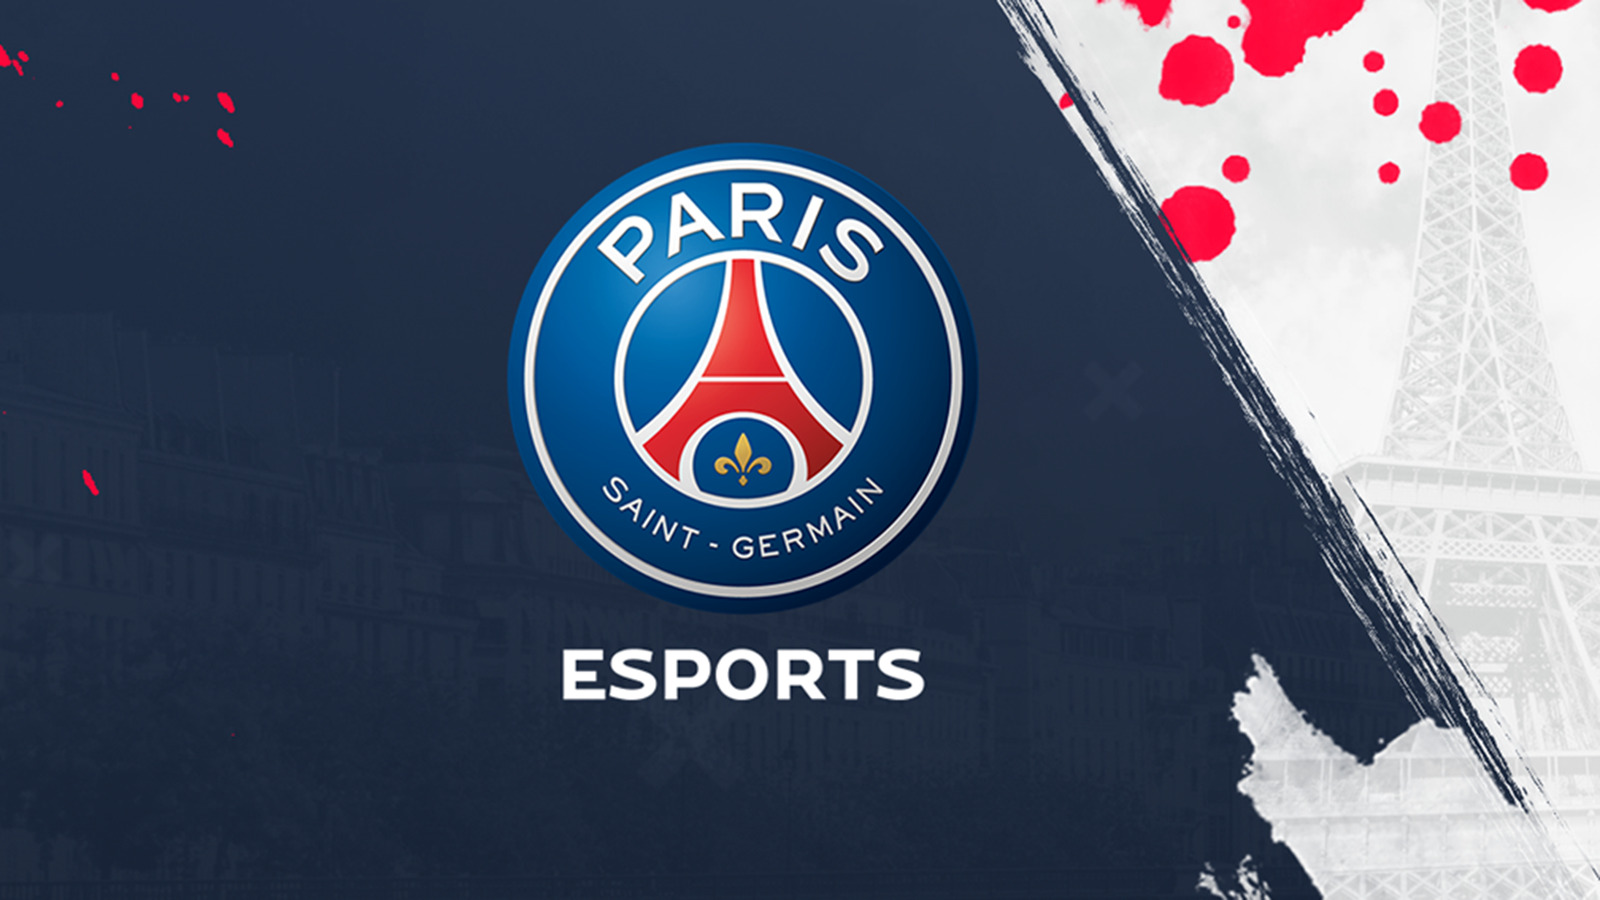 Paris Saint-Germain Esports: A Look at the Club's Six Professional Teams